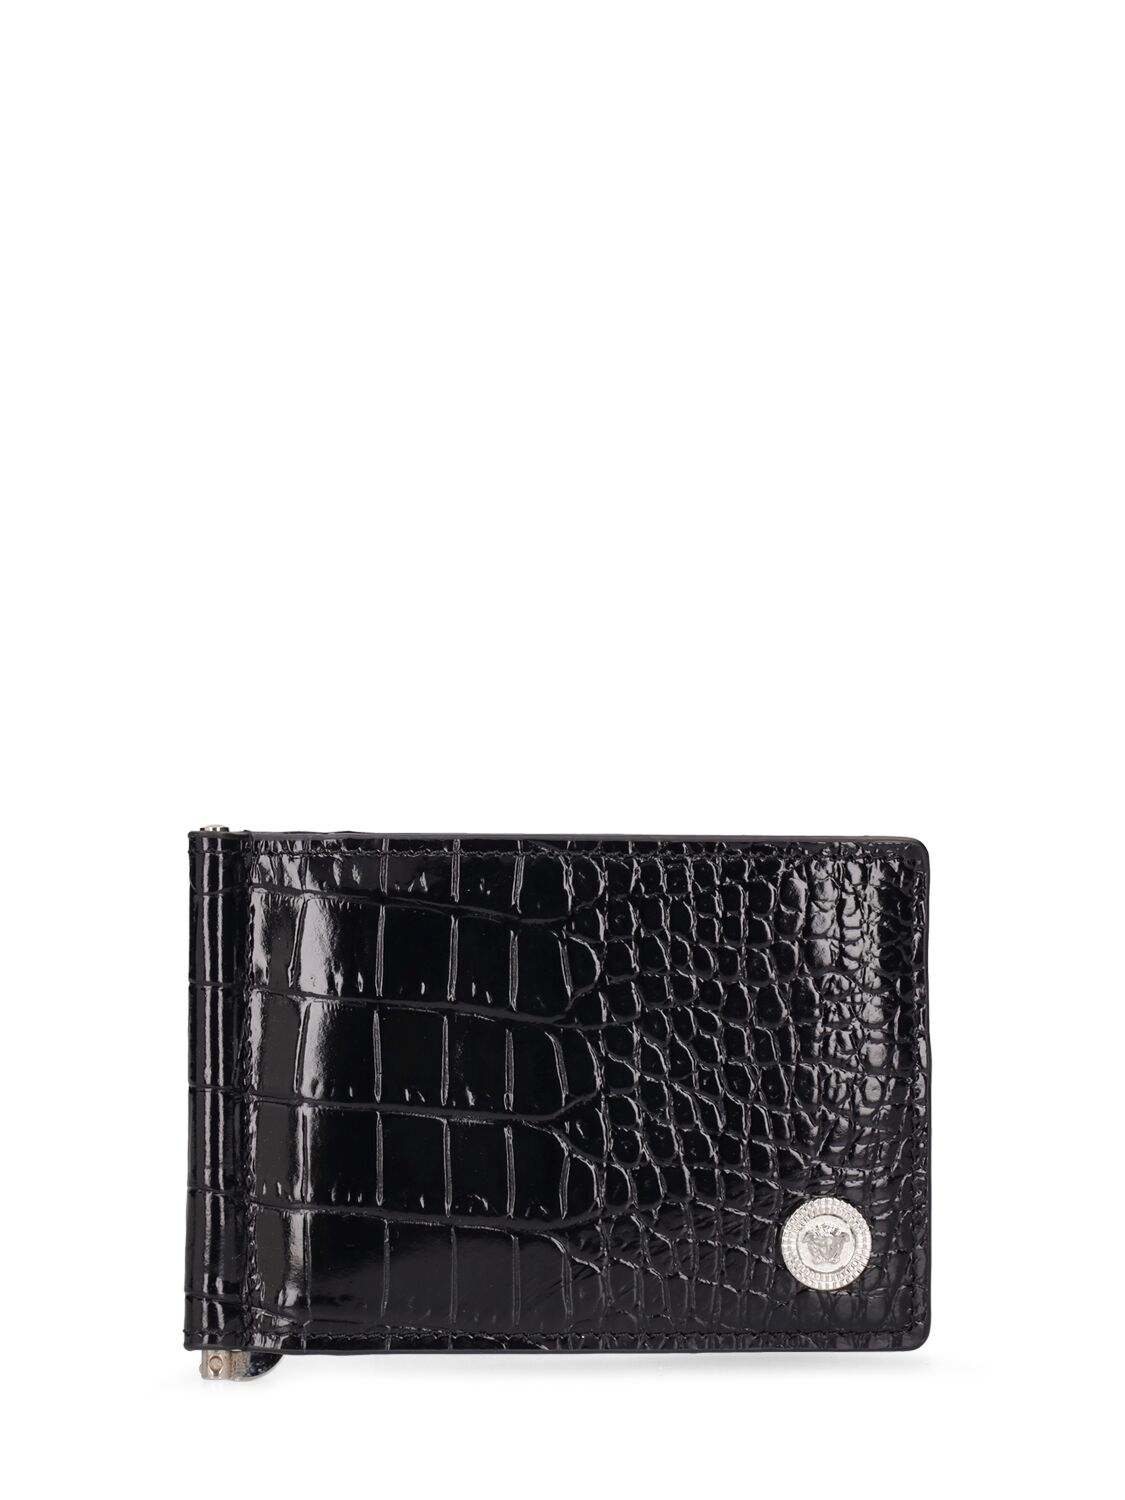 Versace Croc Embossed Leather Wallet In Gray